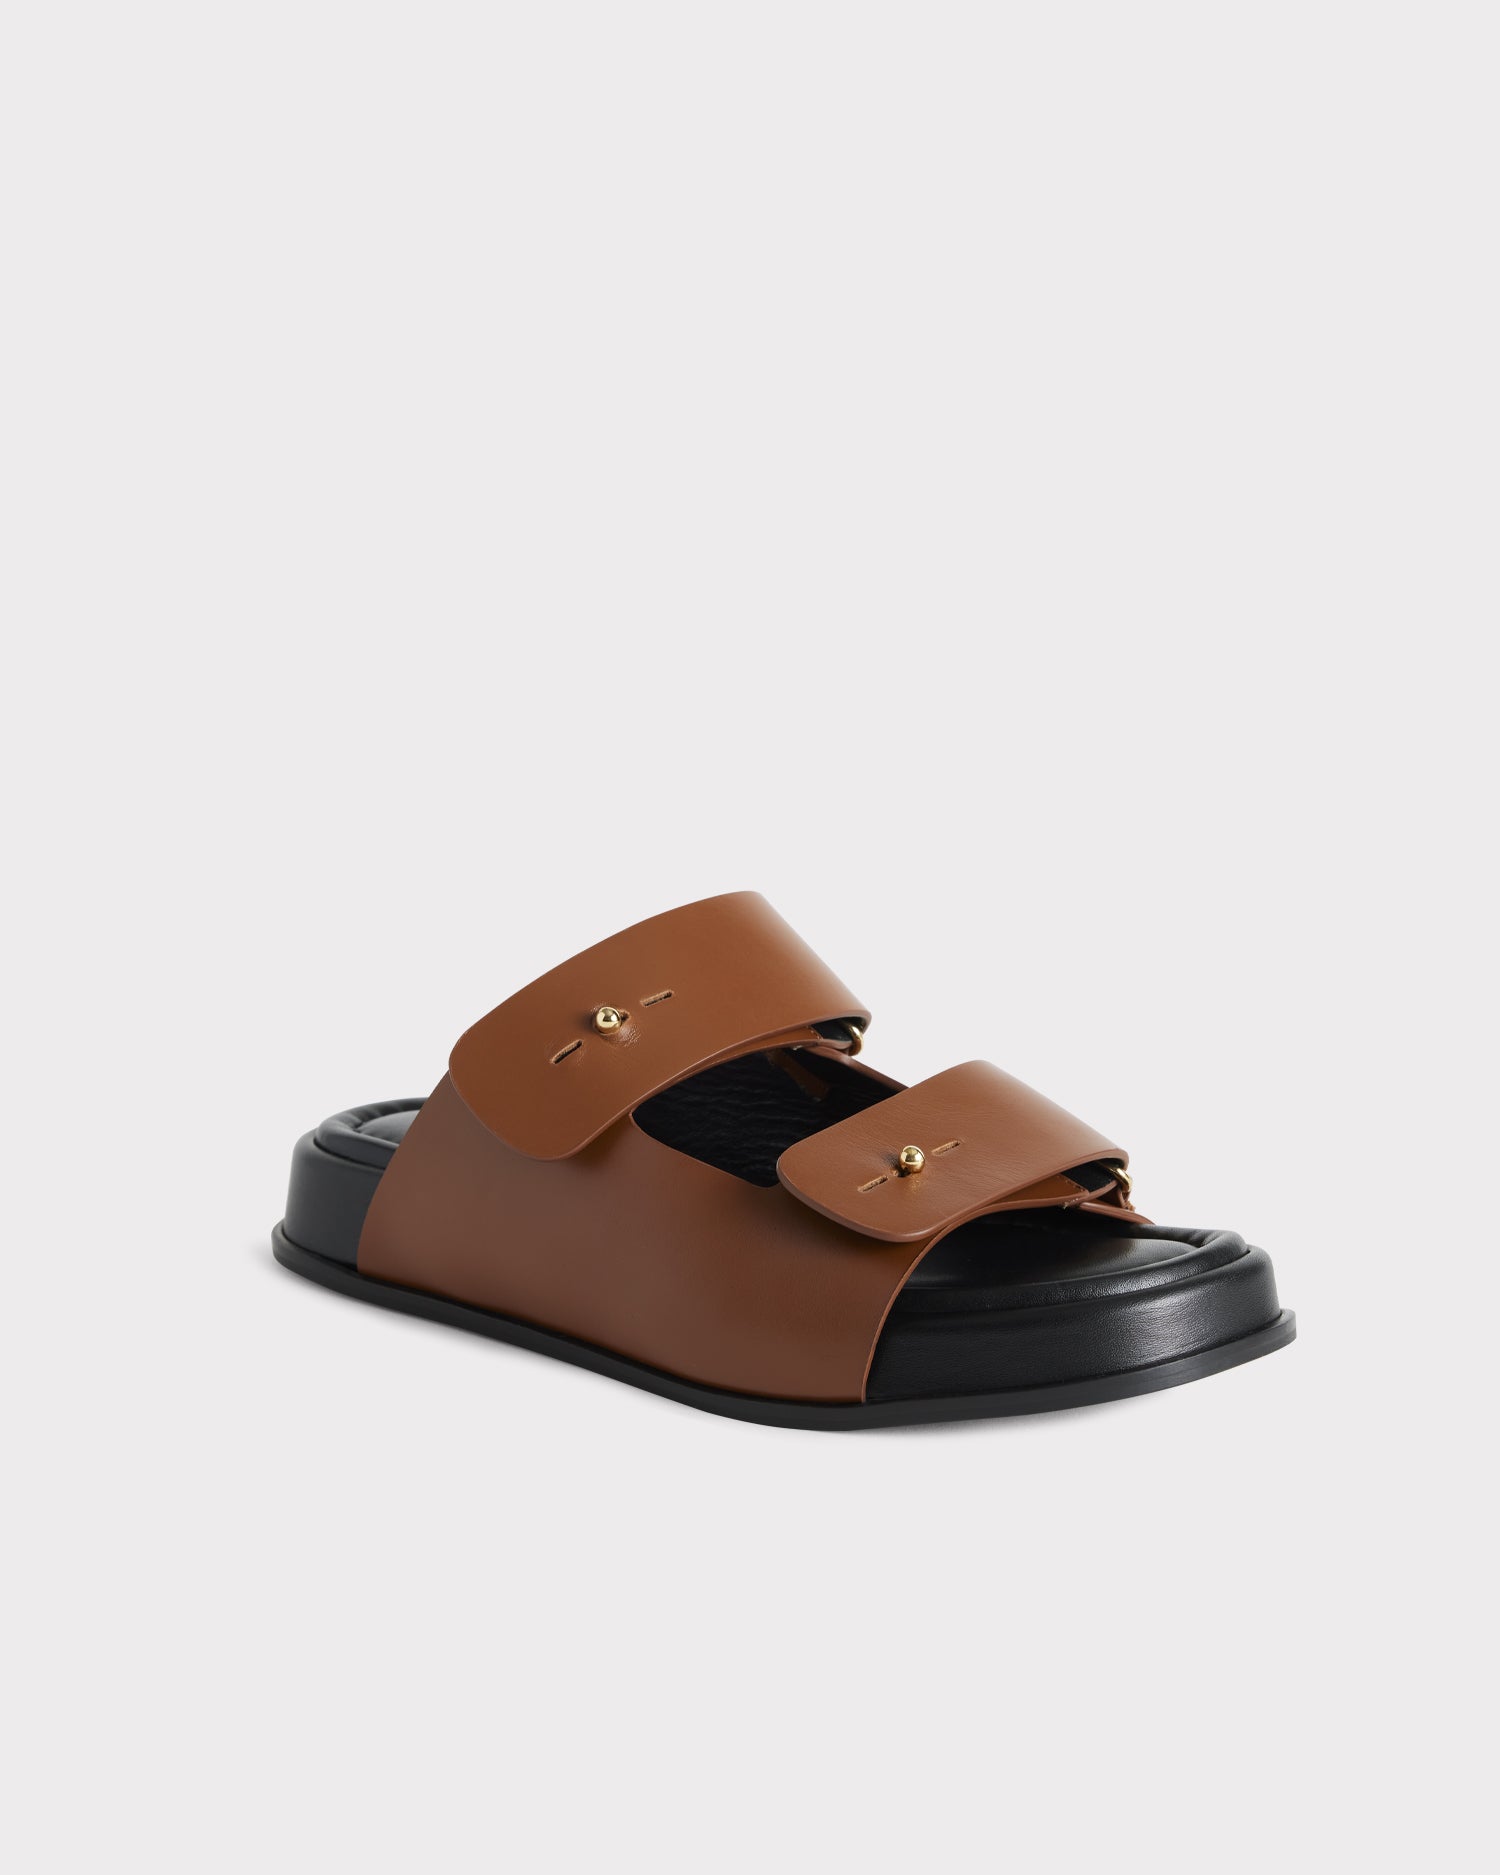 ethical shoe brand brown birkenstock sandal